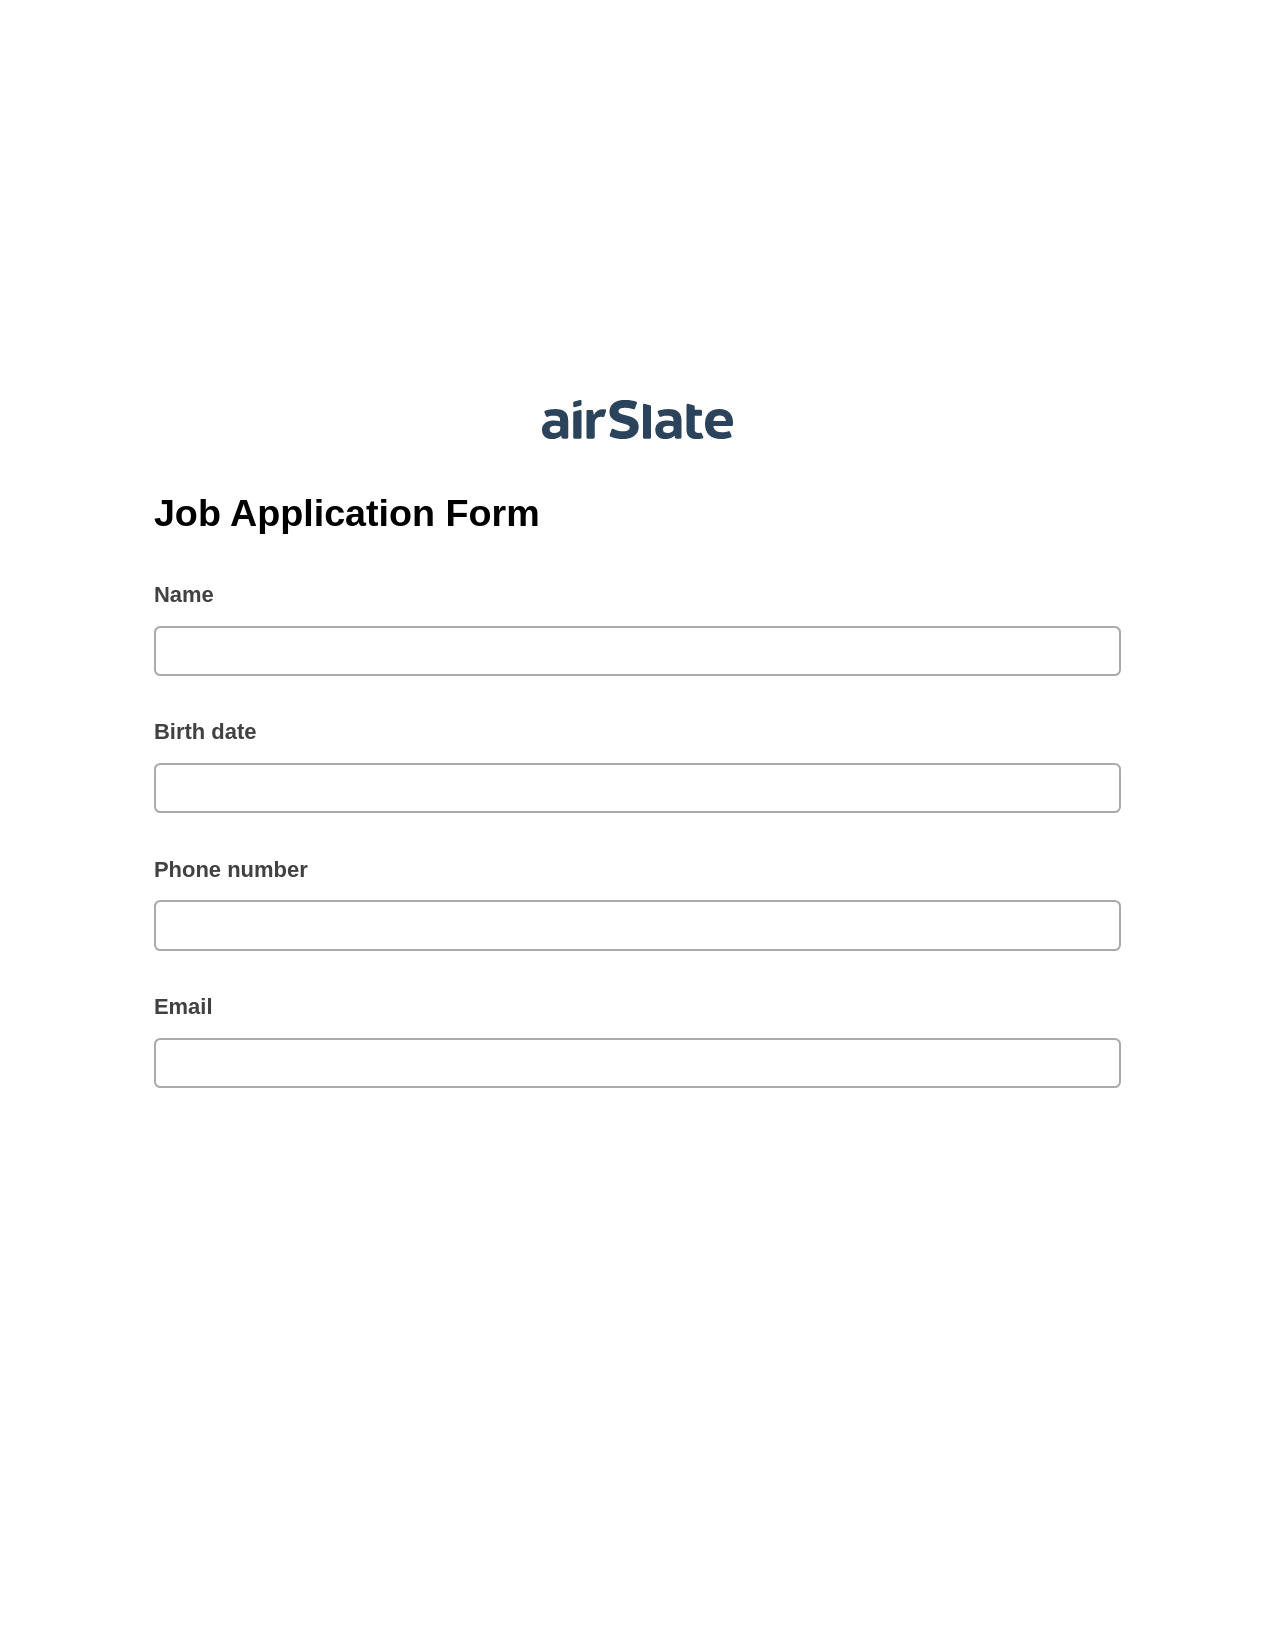 Multirole Job Application Form Pre-fill from MySQL Dropdown Options Bot, Create MS Dynamics 365 Records Bot, Post-finish Document Bot